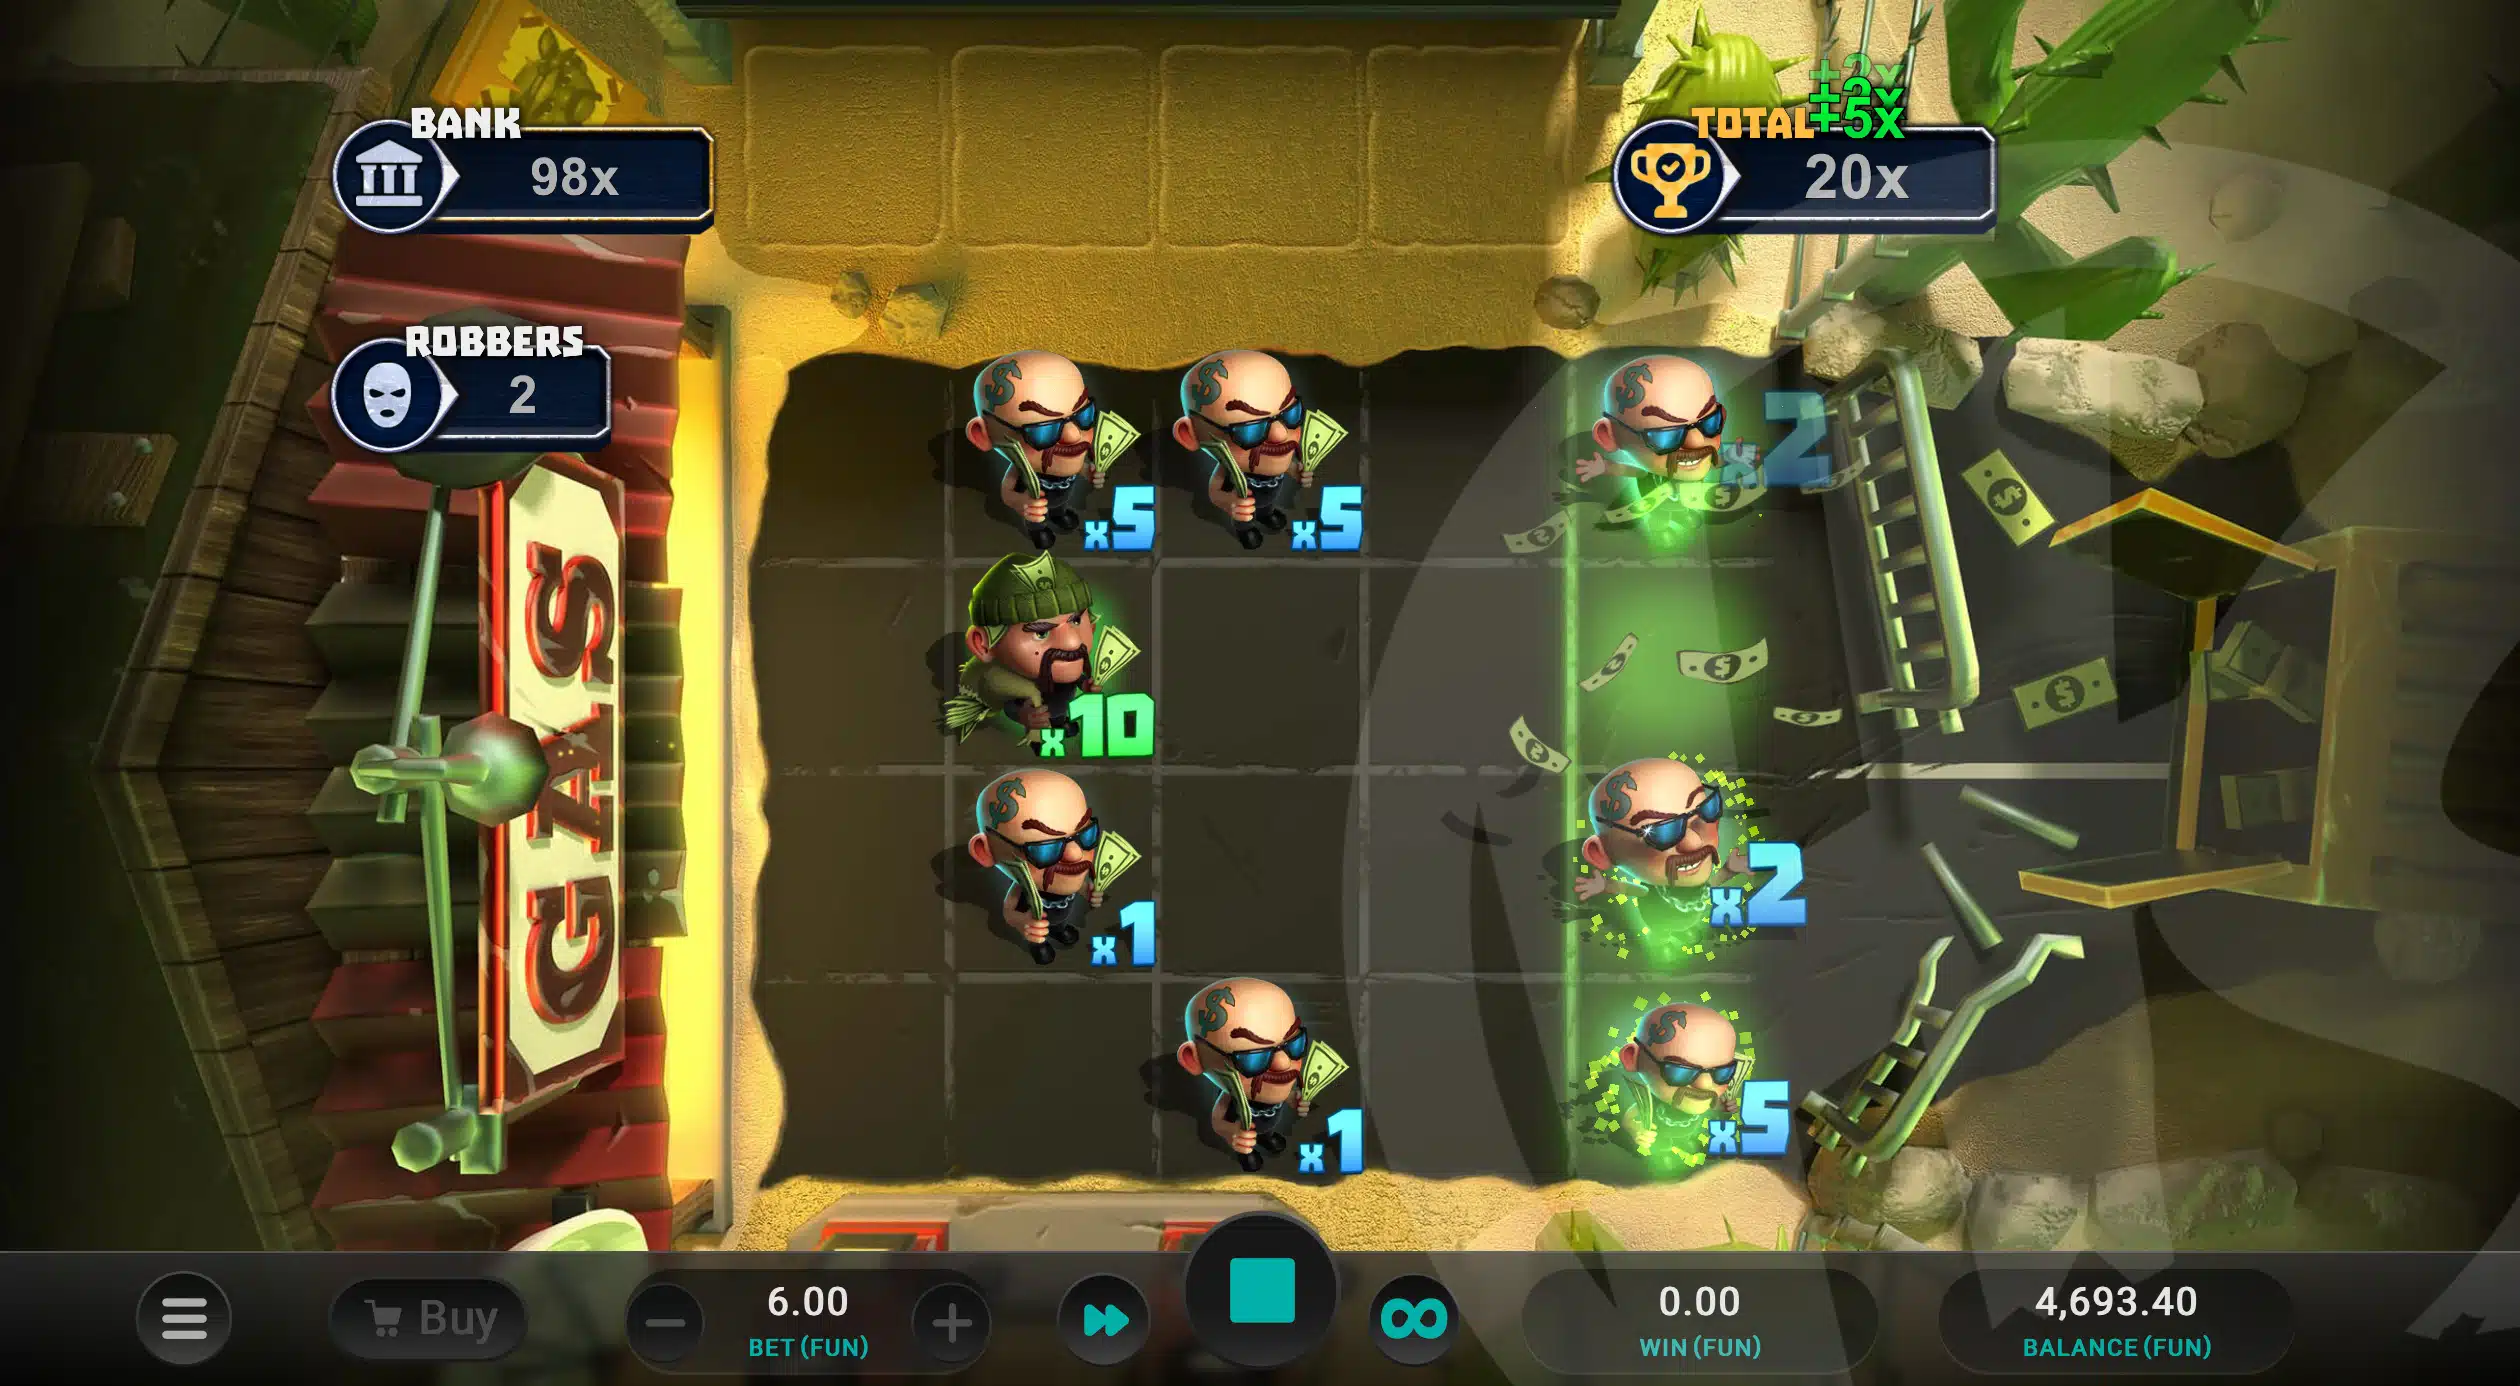 Players Can Progress Through 3 Levels in the Mega Heist Bonus